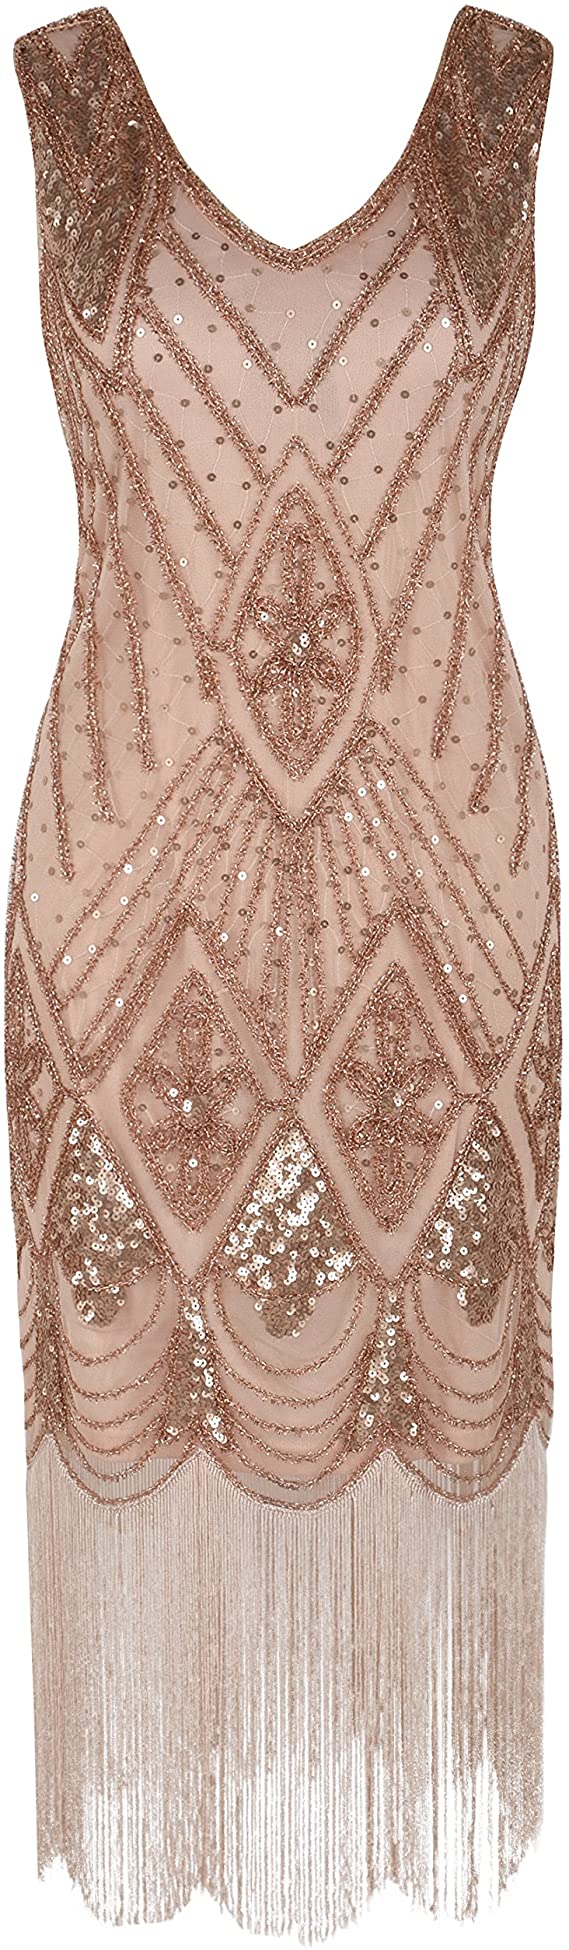 PrettyGuide Sequin Flapper Dress For Women